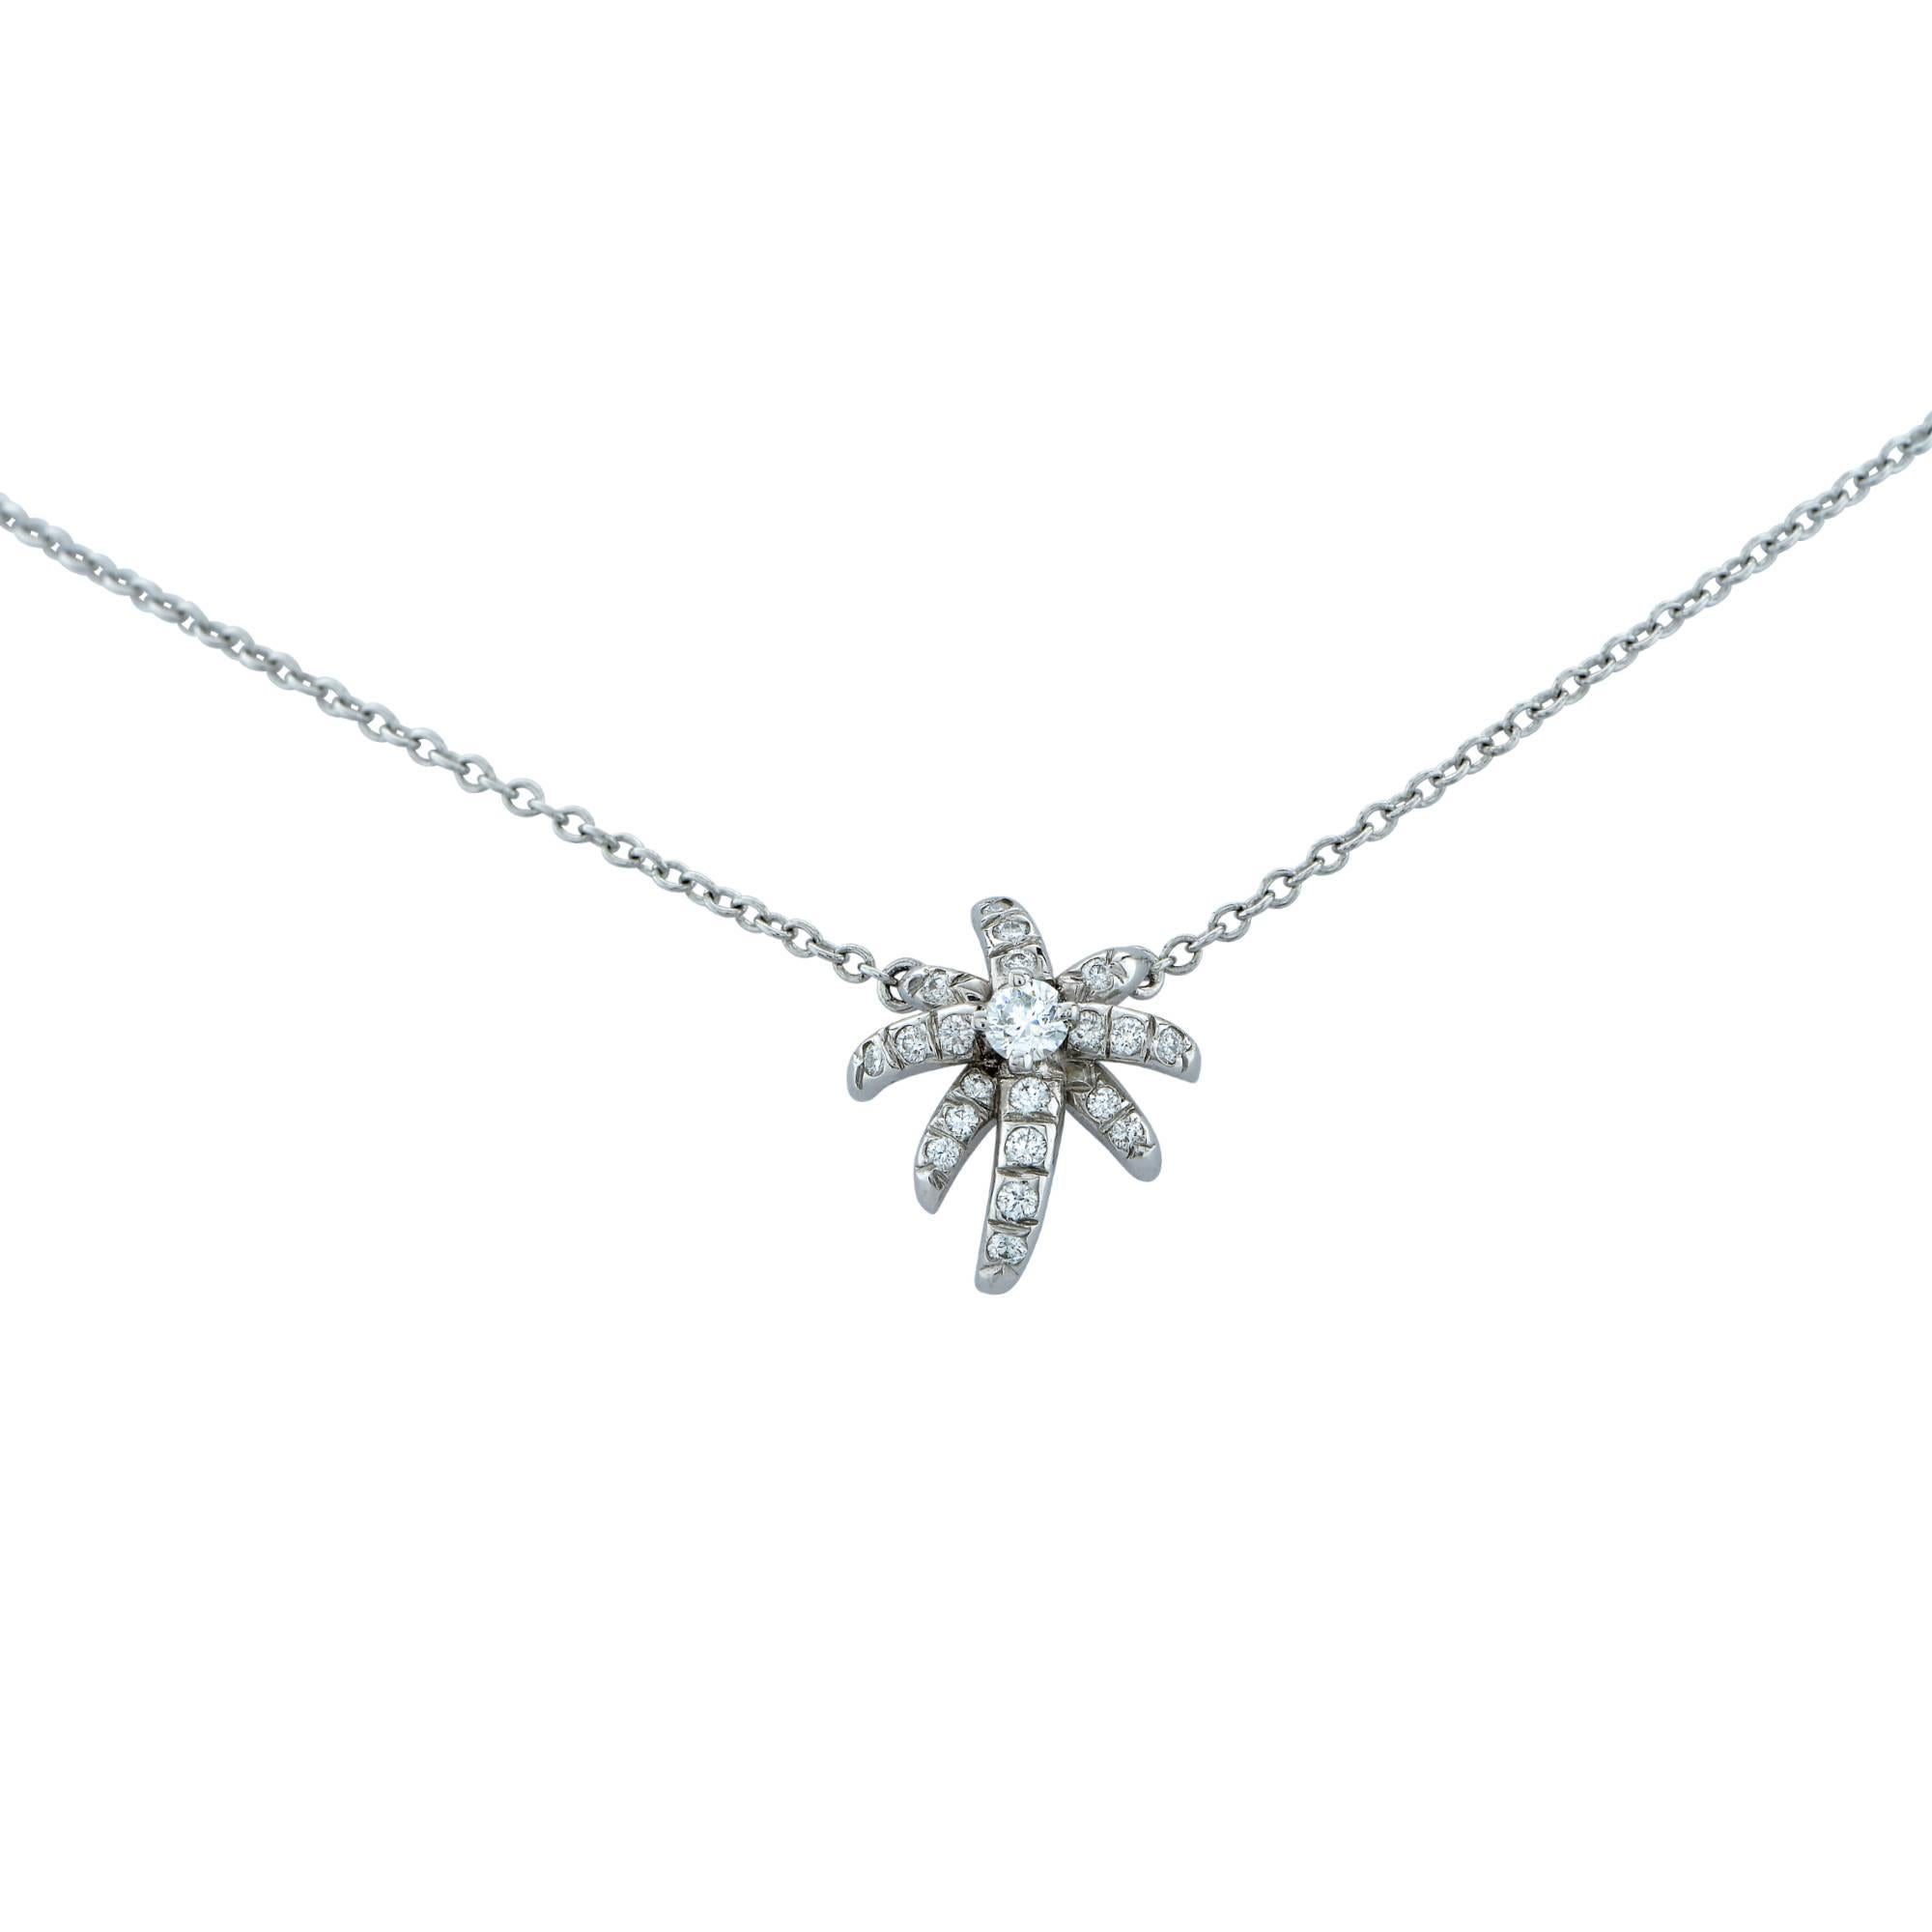 Platinum Tiffany And Co. Fireworks Diamond Necklace. 

Size: 16